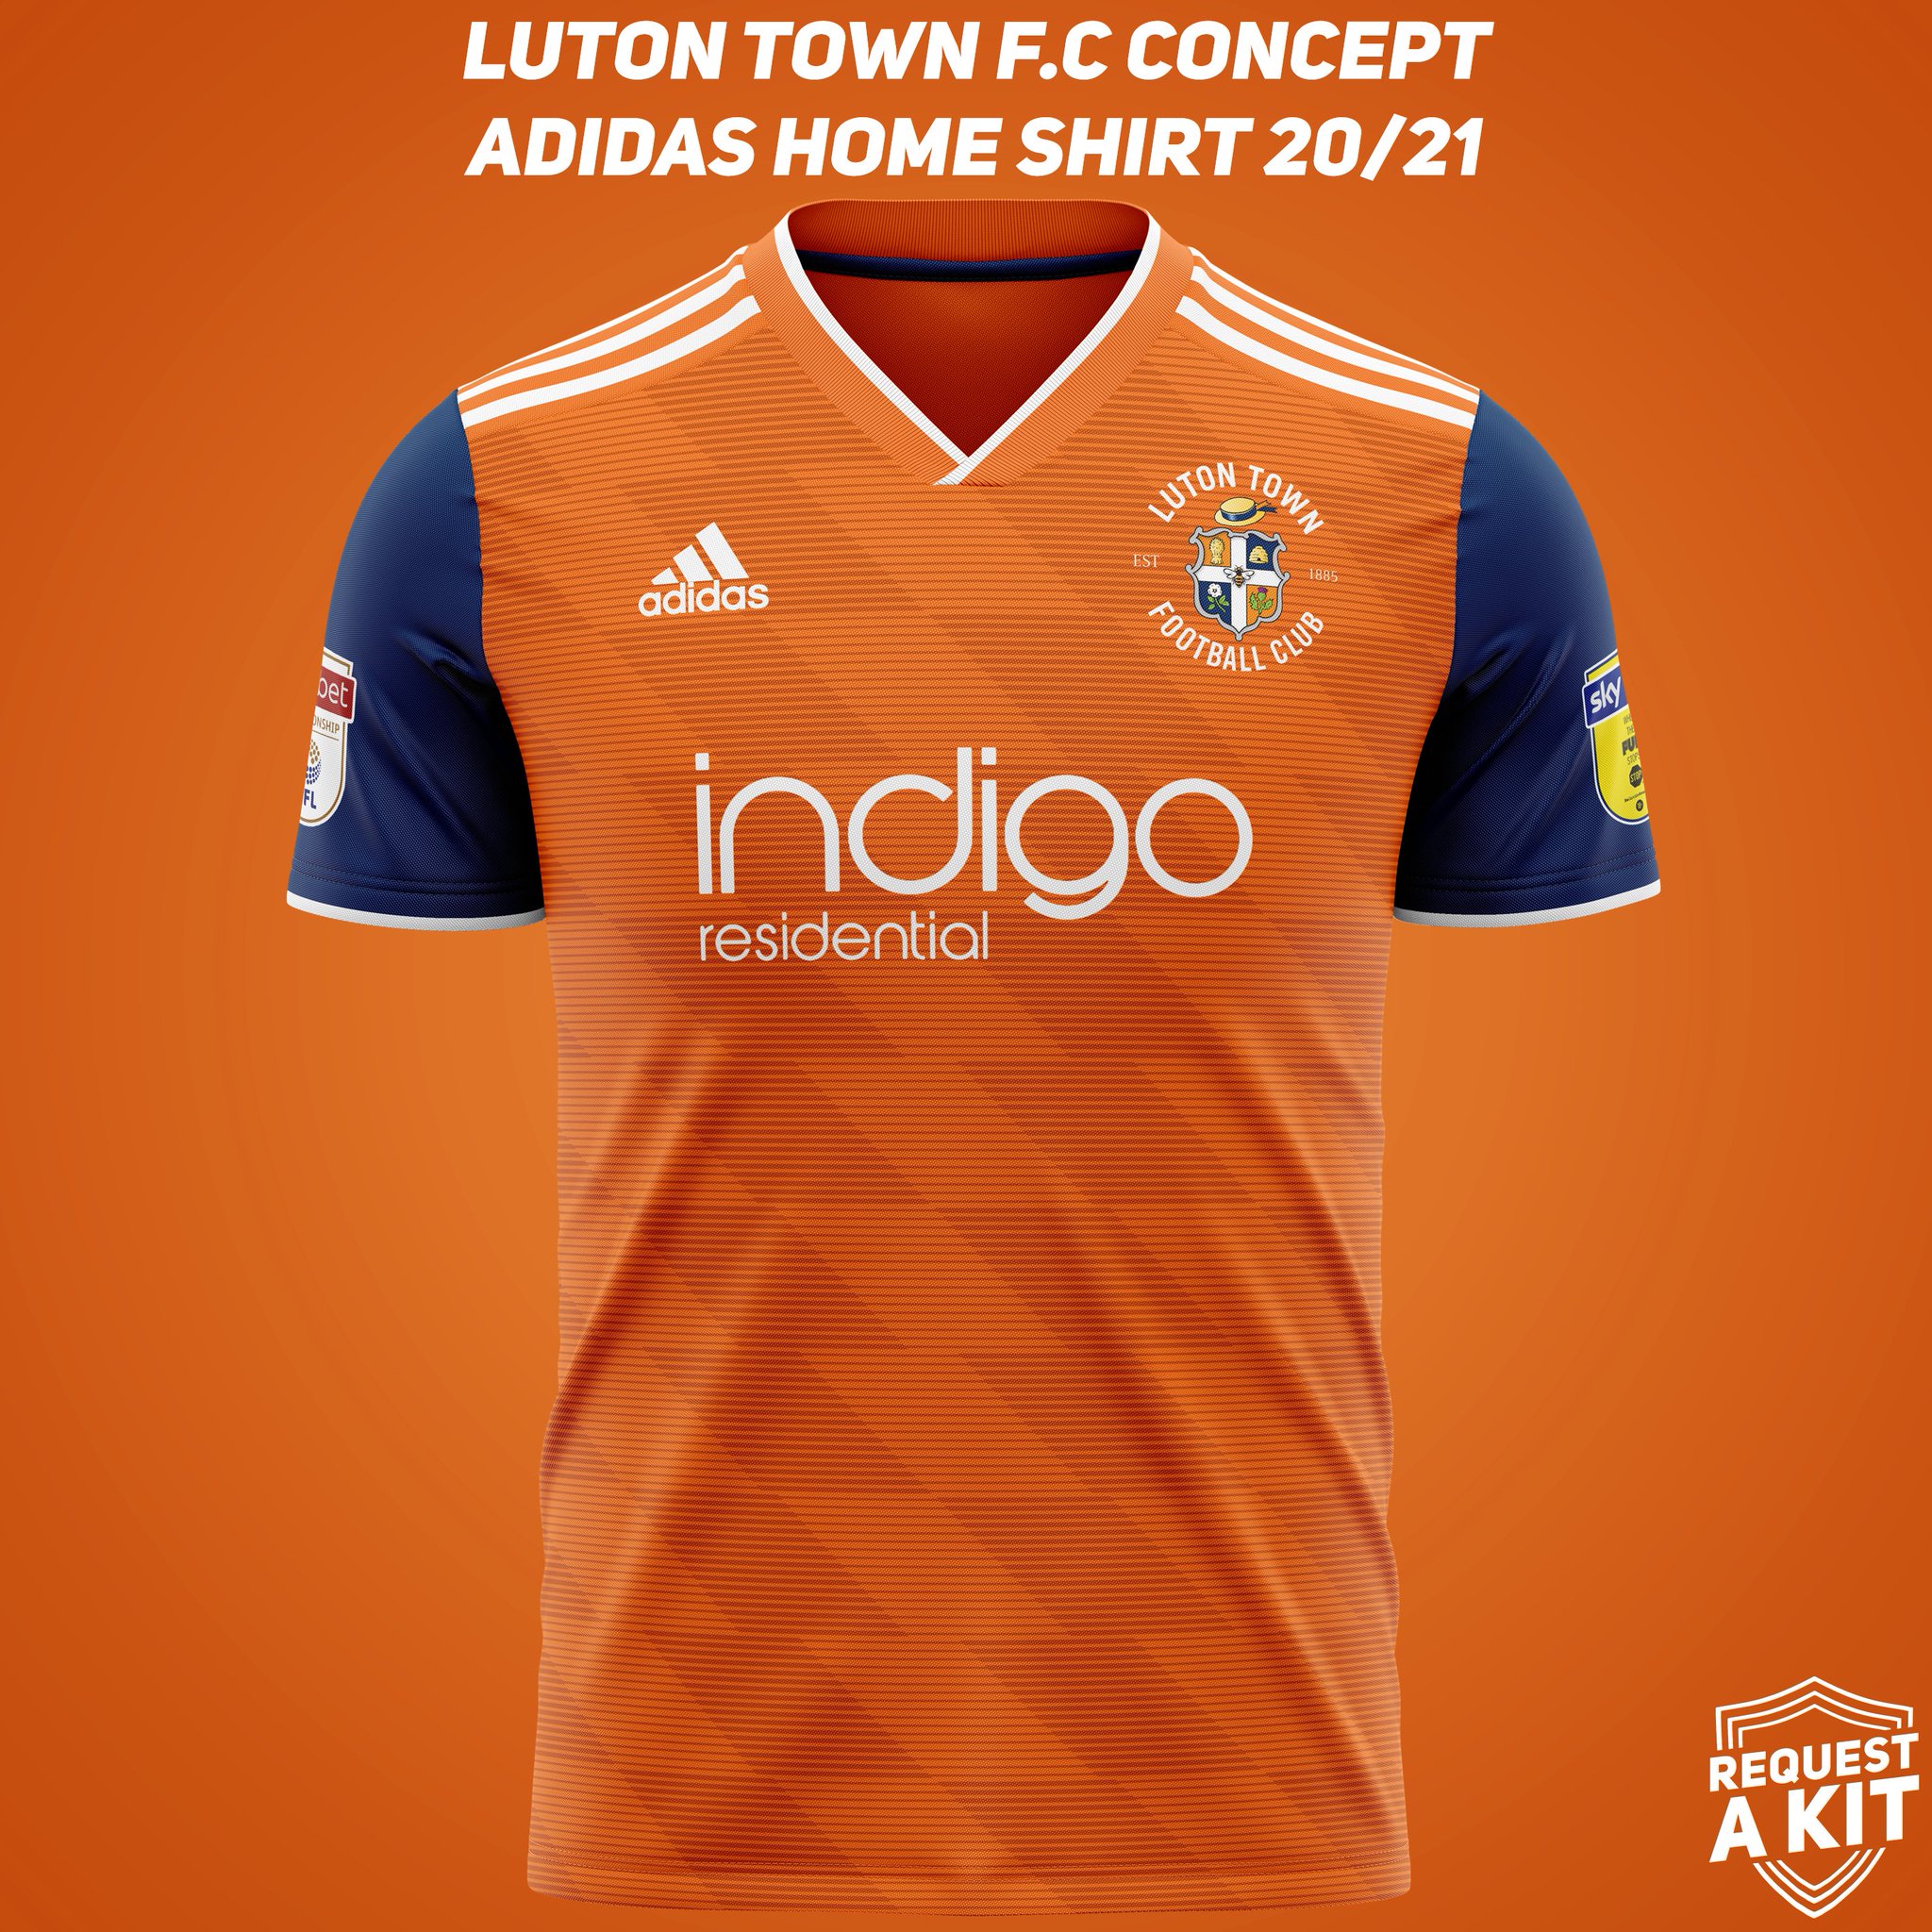 Luton Town F.C Concept Adidas 